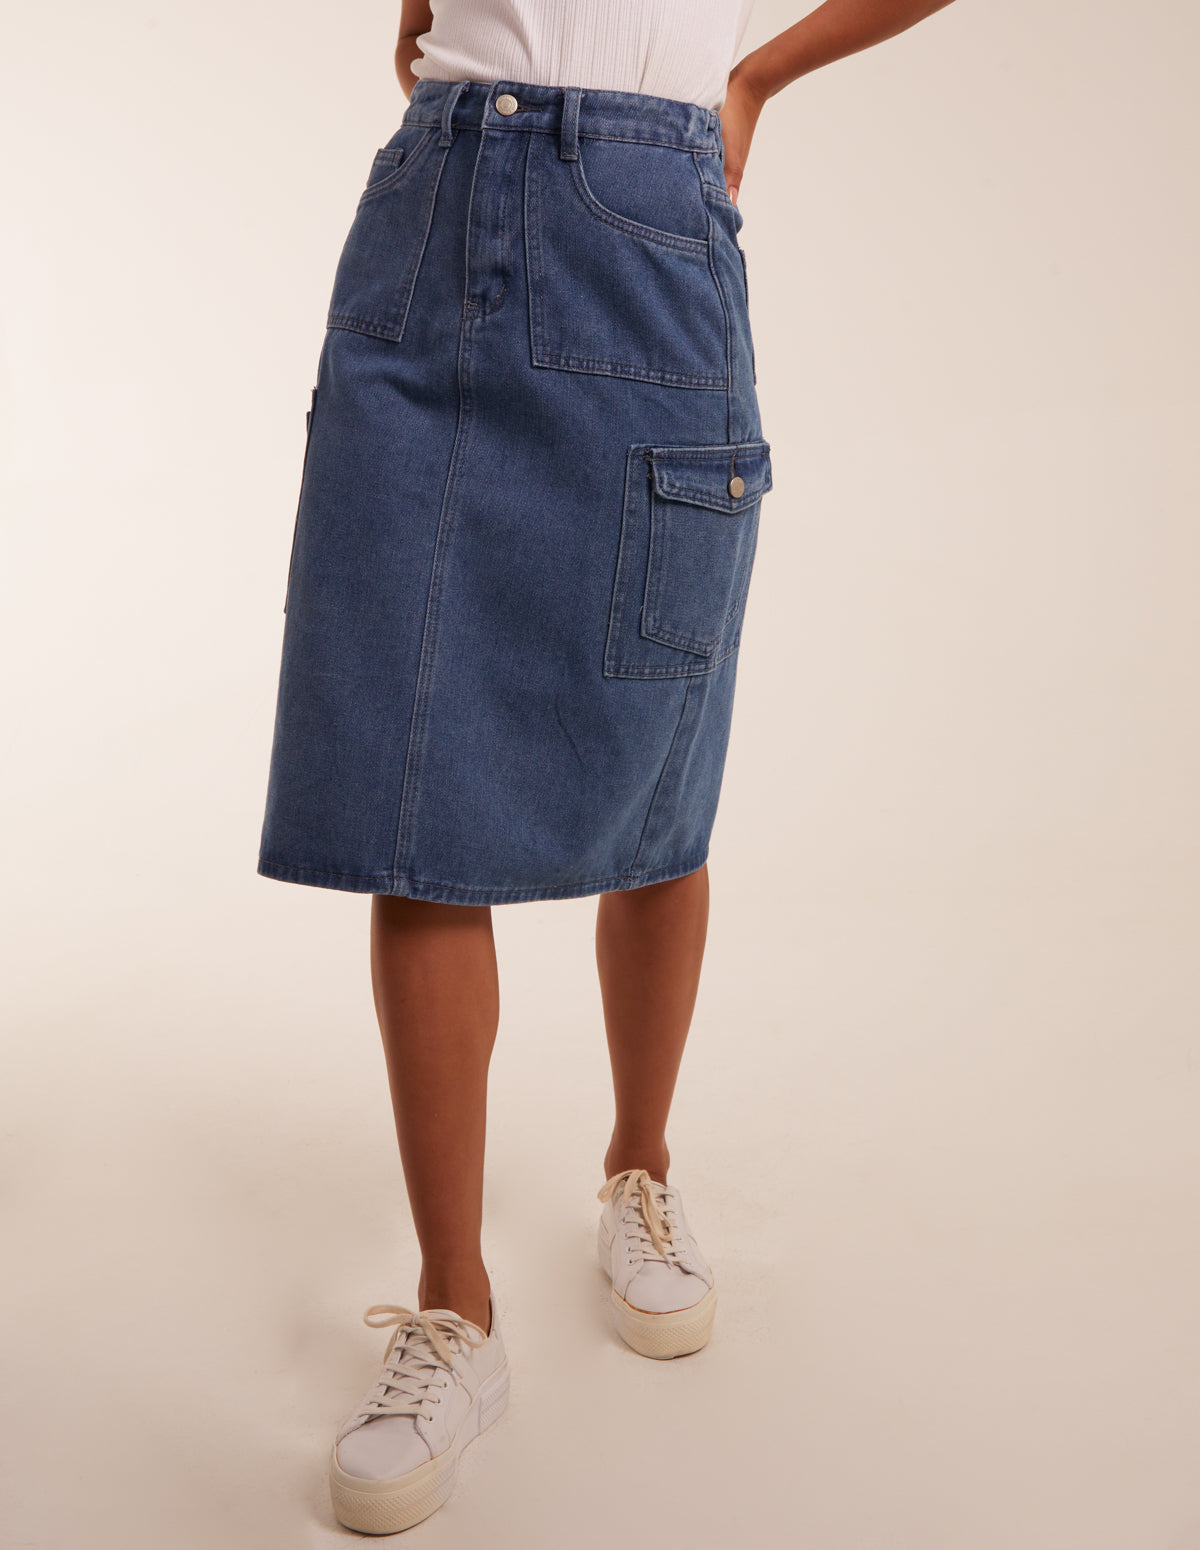 Pocket Denim Skirt - 14 / DENIM